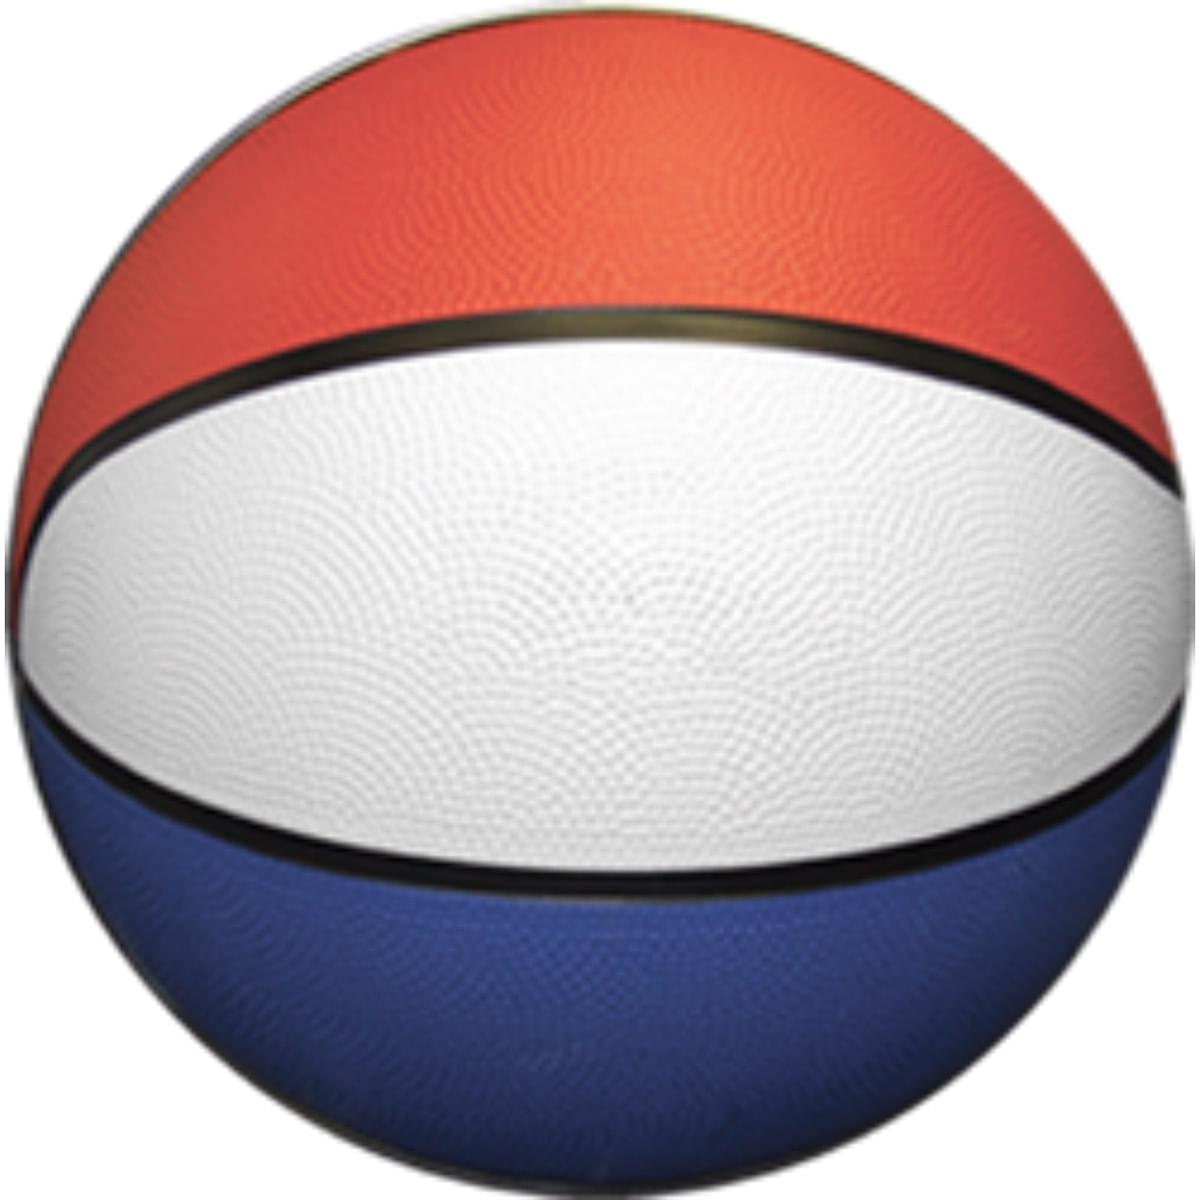 5" Mini Rubber Basketball - Colors